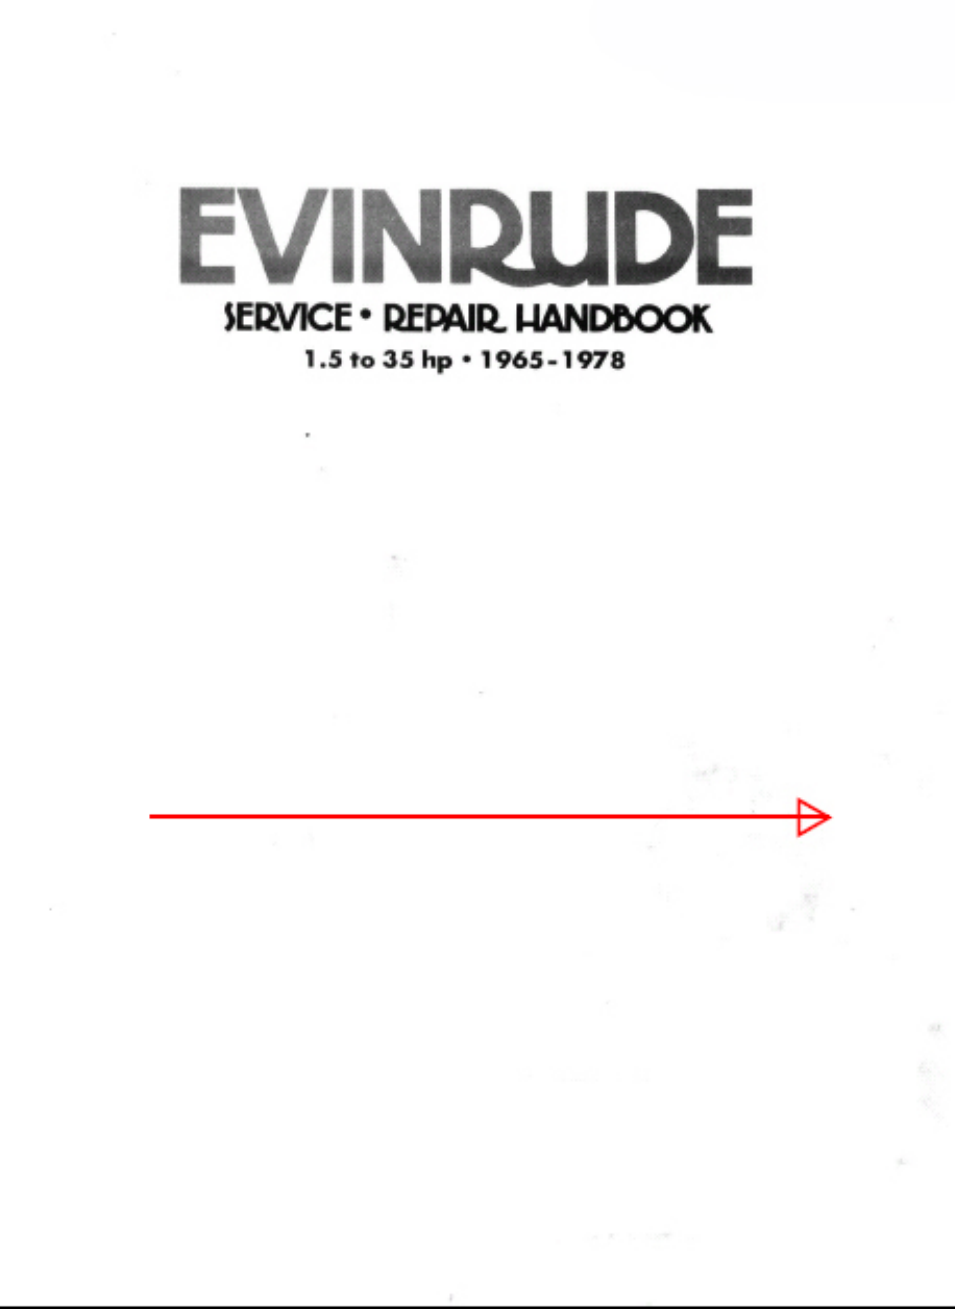 1965-1978 Evinrude Johnson 1.5hp, 2hp, 3hp, 4hp, 5hp, 6hp, 9.5hp, 9.9hp, 15hp, 18hp, 25hp, 33hp, 35hp outboard motor service repair handbook Preview image 6